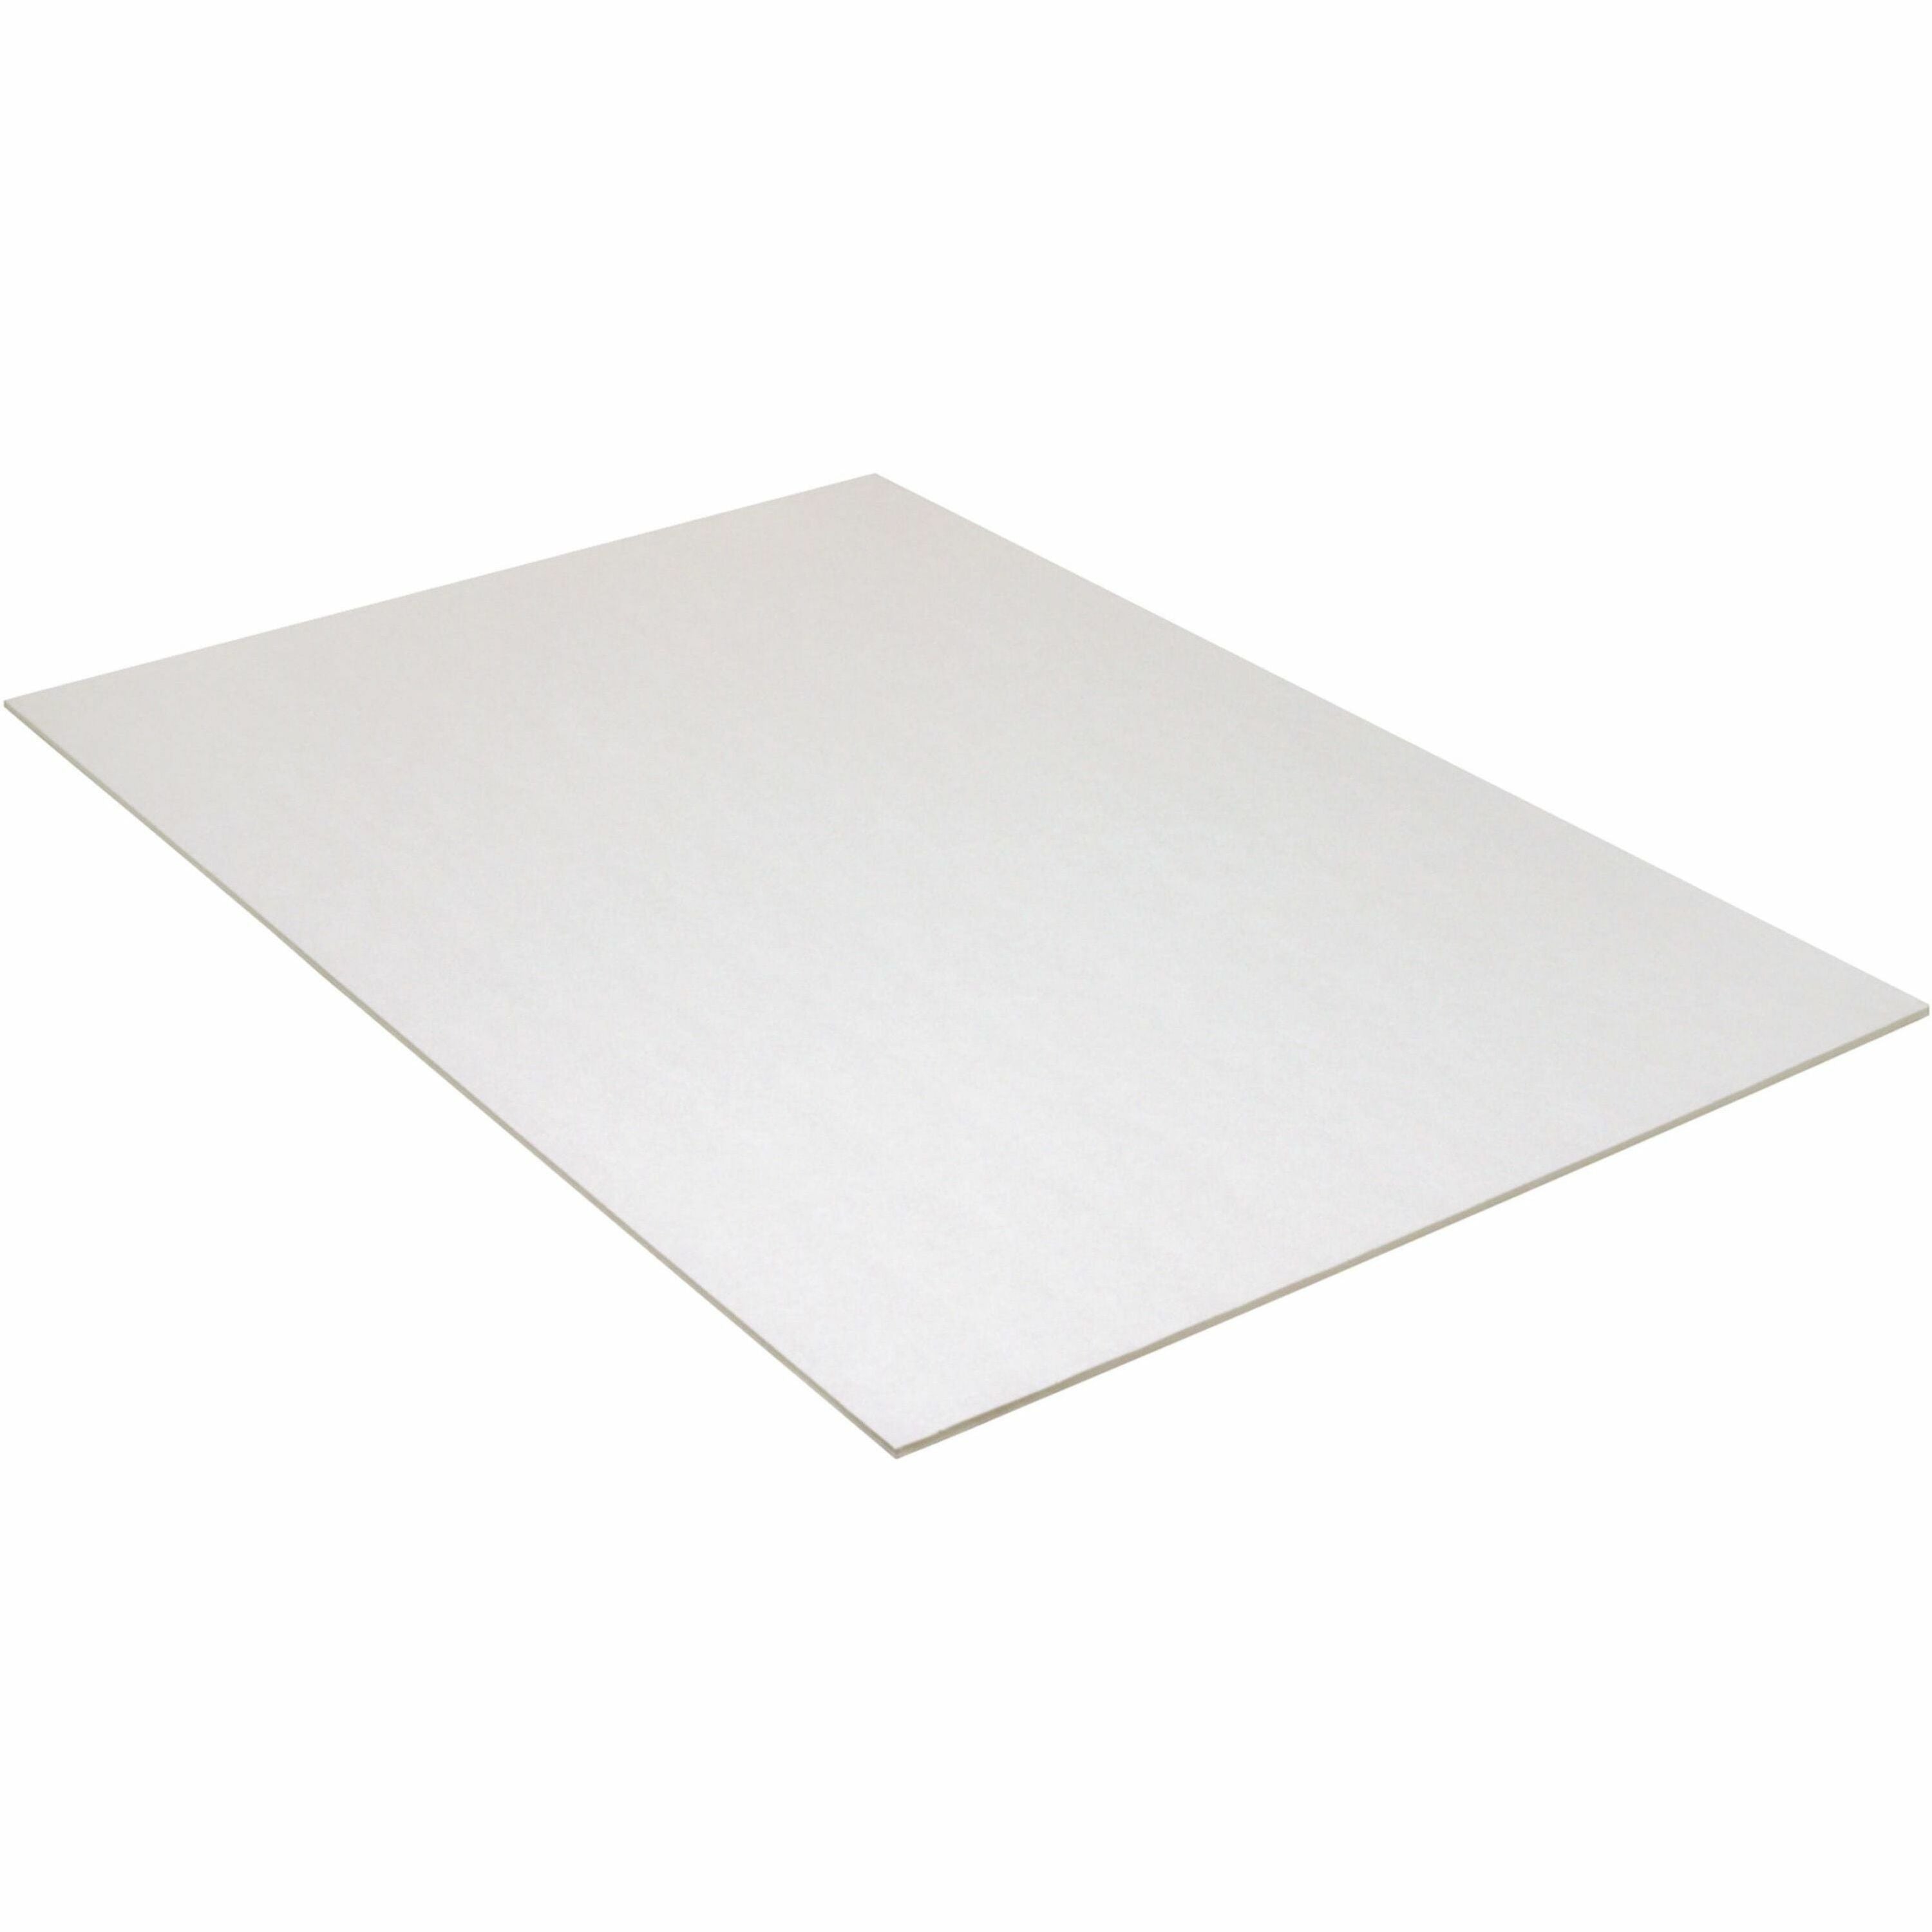 UCreate Foam Board - 10 / Carton - White - Foam - 